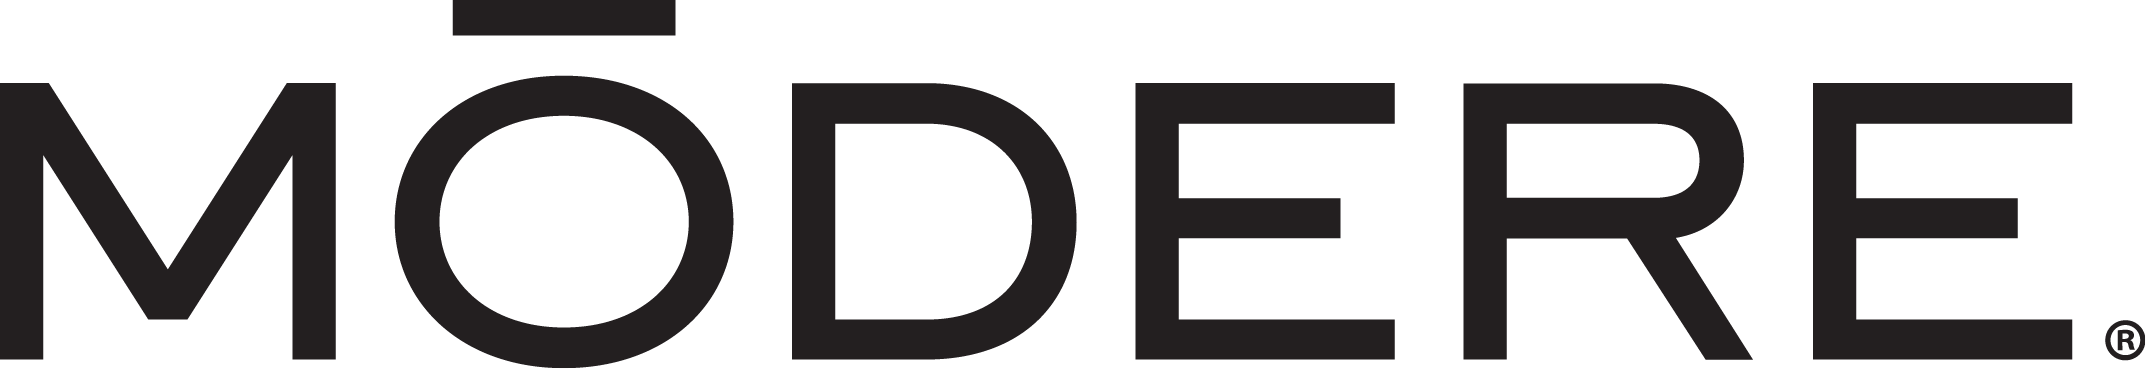 modere-logo-black.png